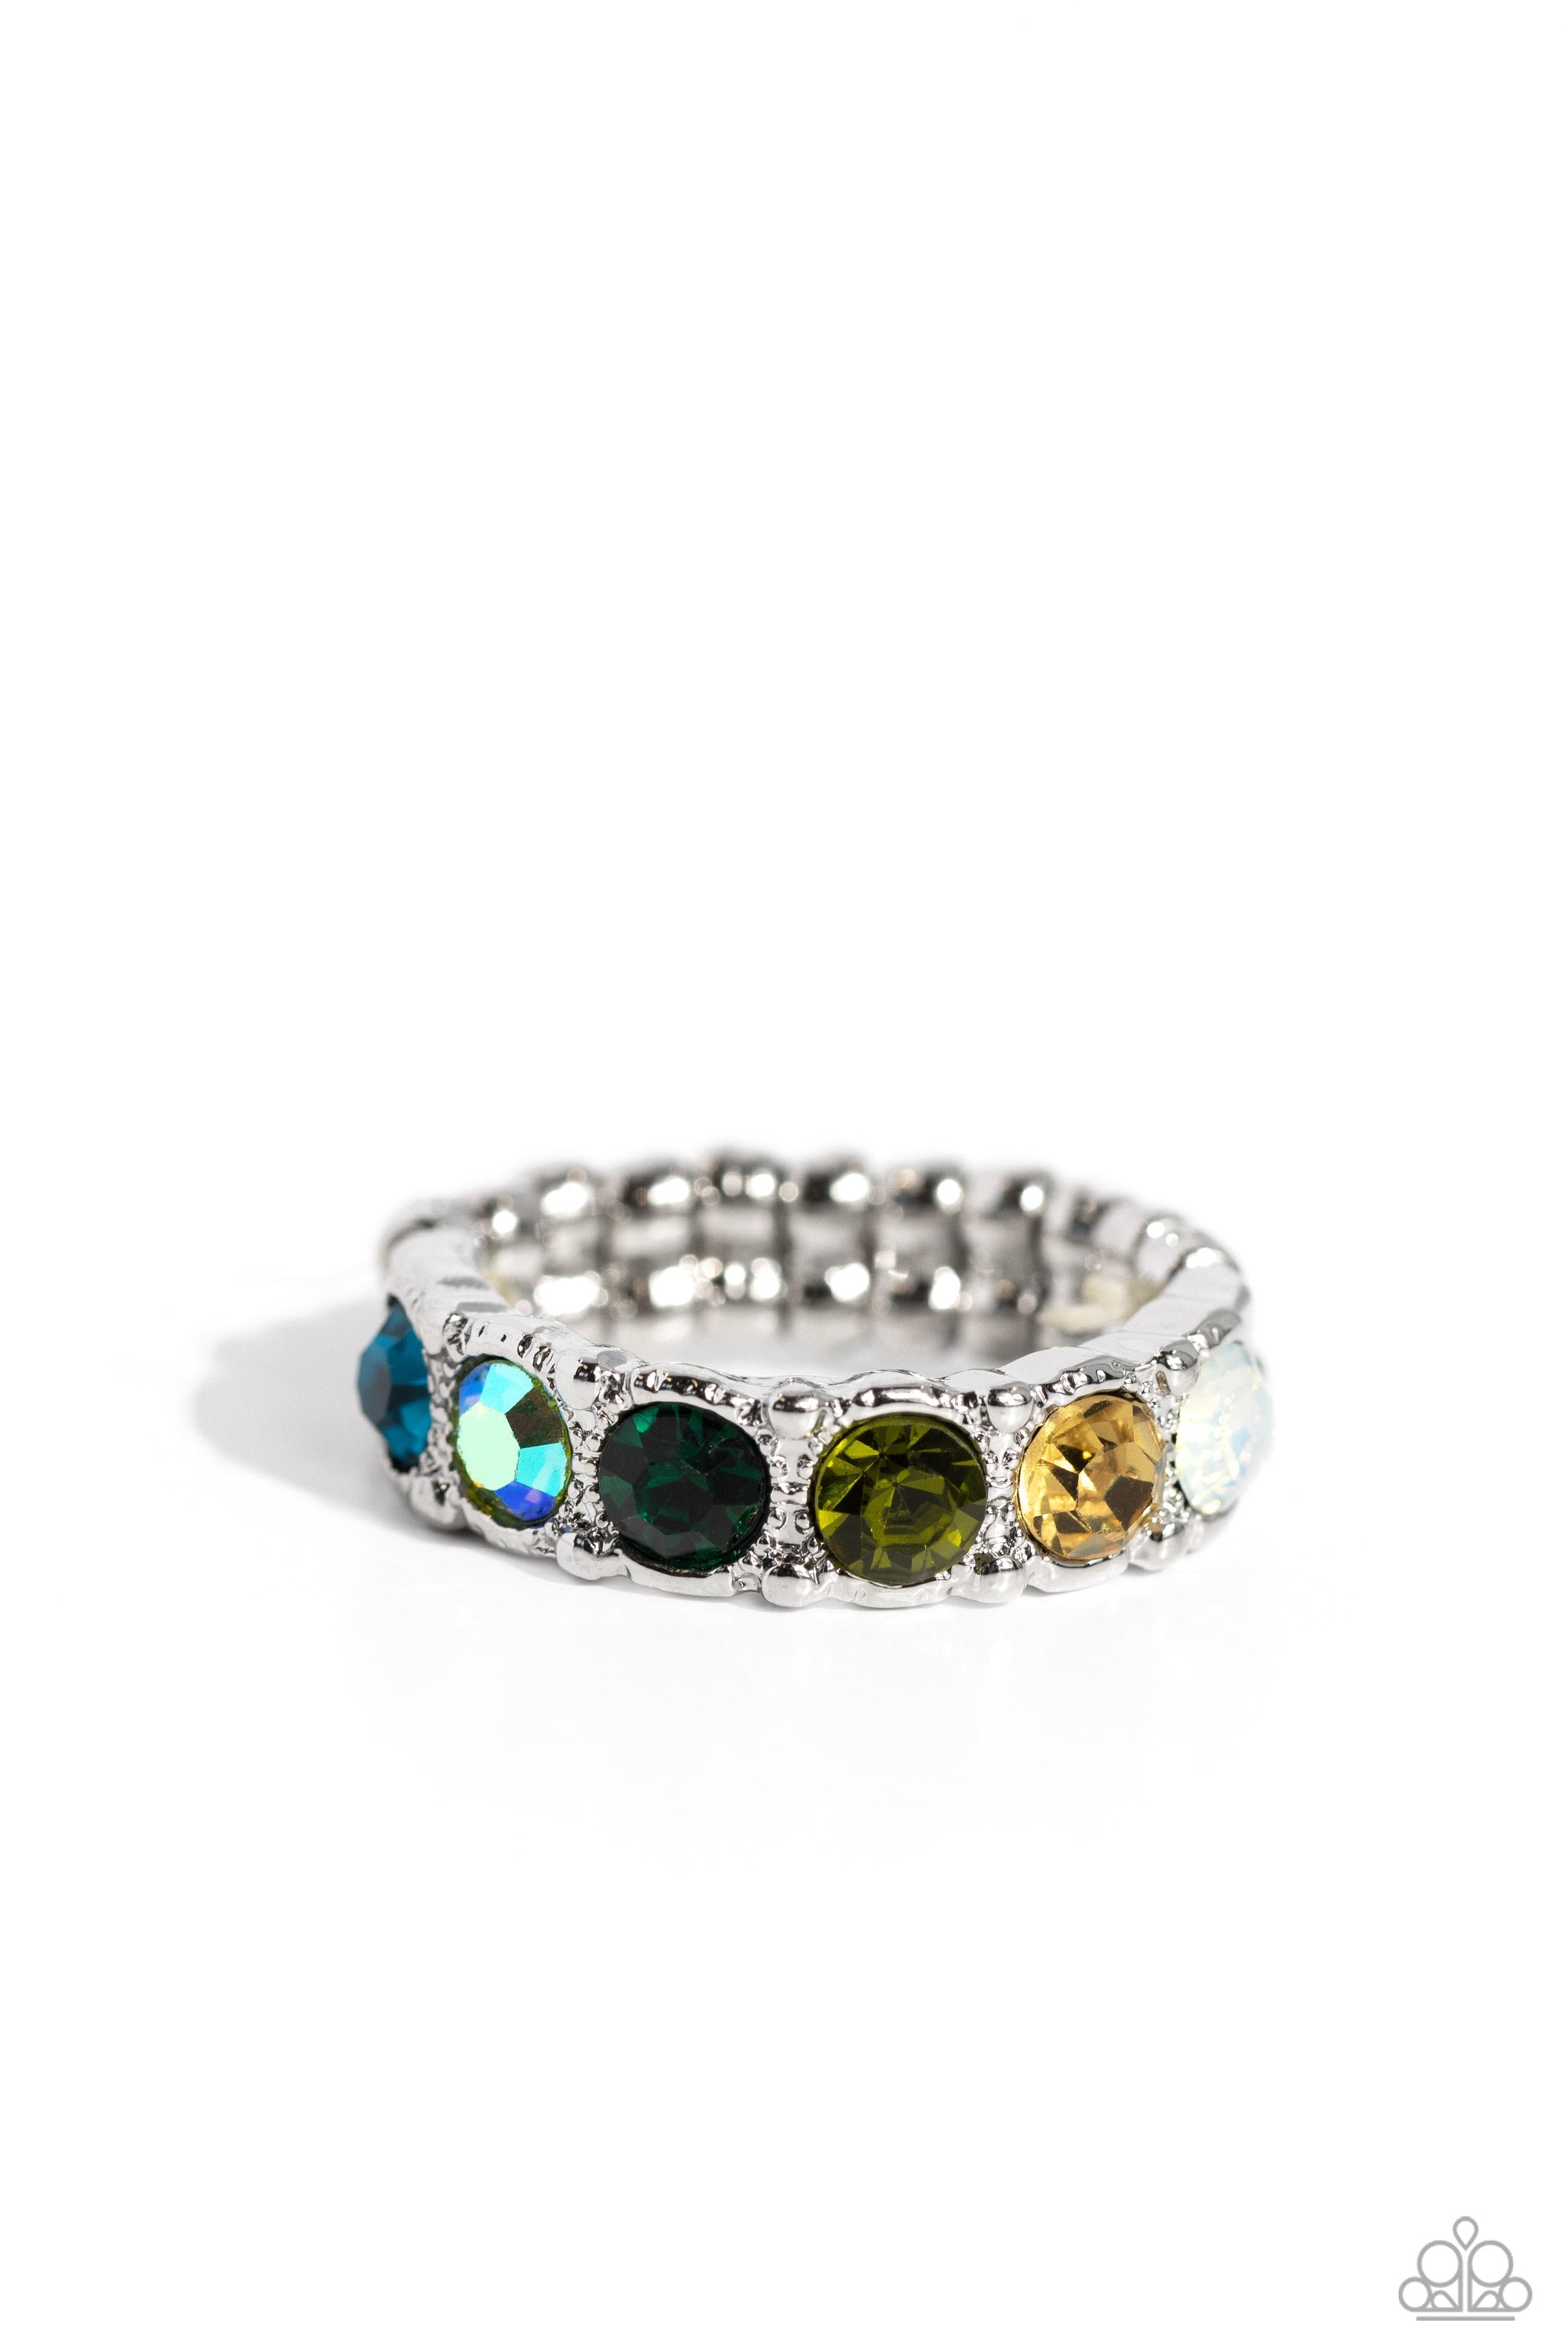 Taming Twilight Green & Multi Rhinestone Ring - Paparazzi Accessories- lightbox - CarasShop.com - $5 Jewelry by Cara Jewels